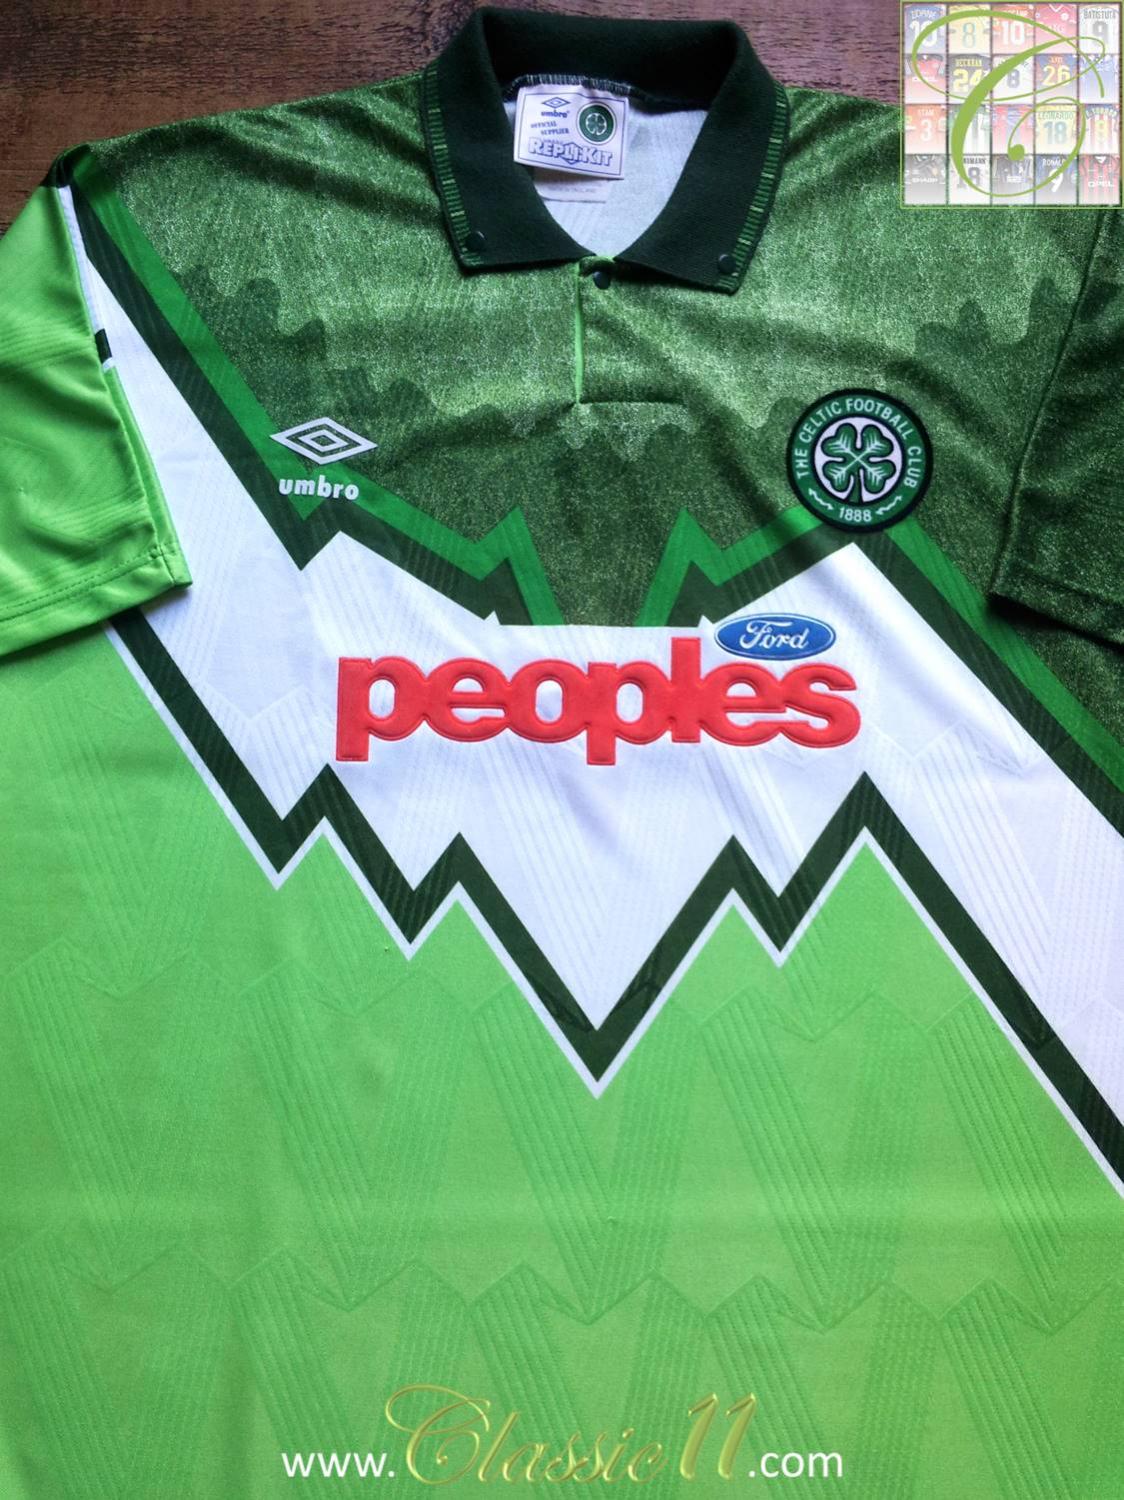 Retro Shirt Classic Football Shirt Glasgow Celtic 1991-92 Away Shirt 